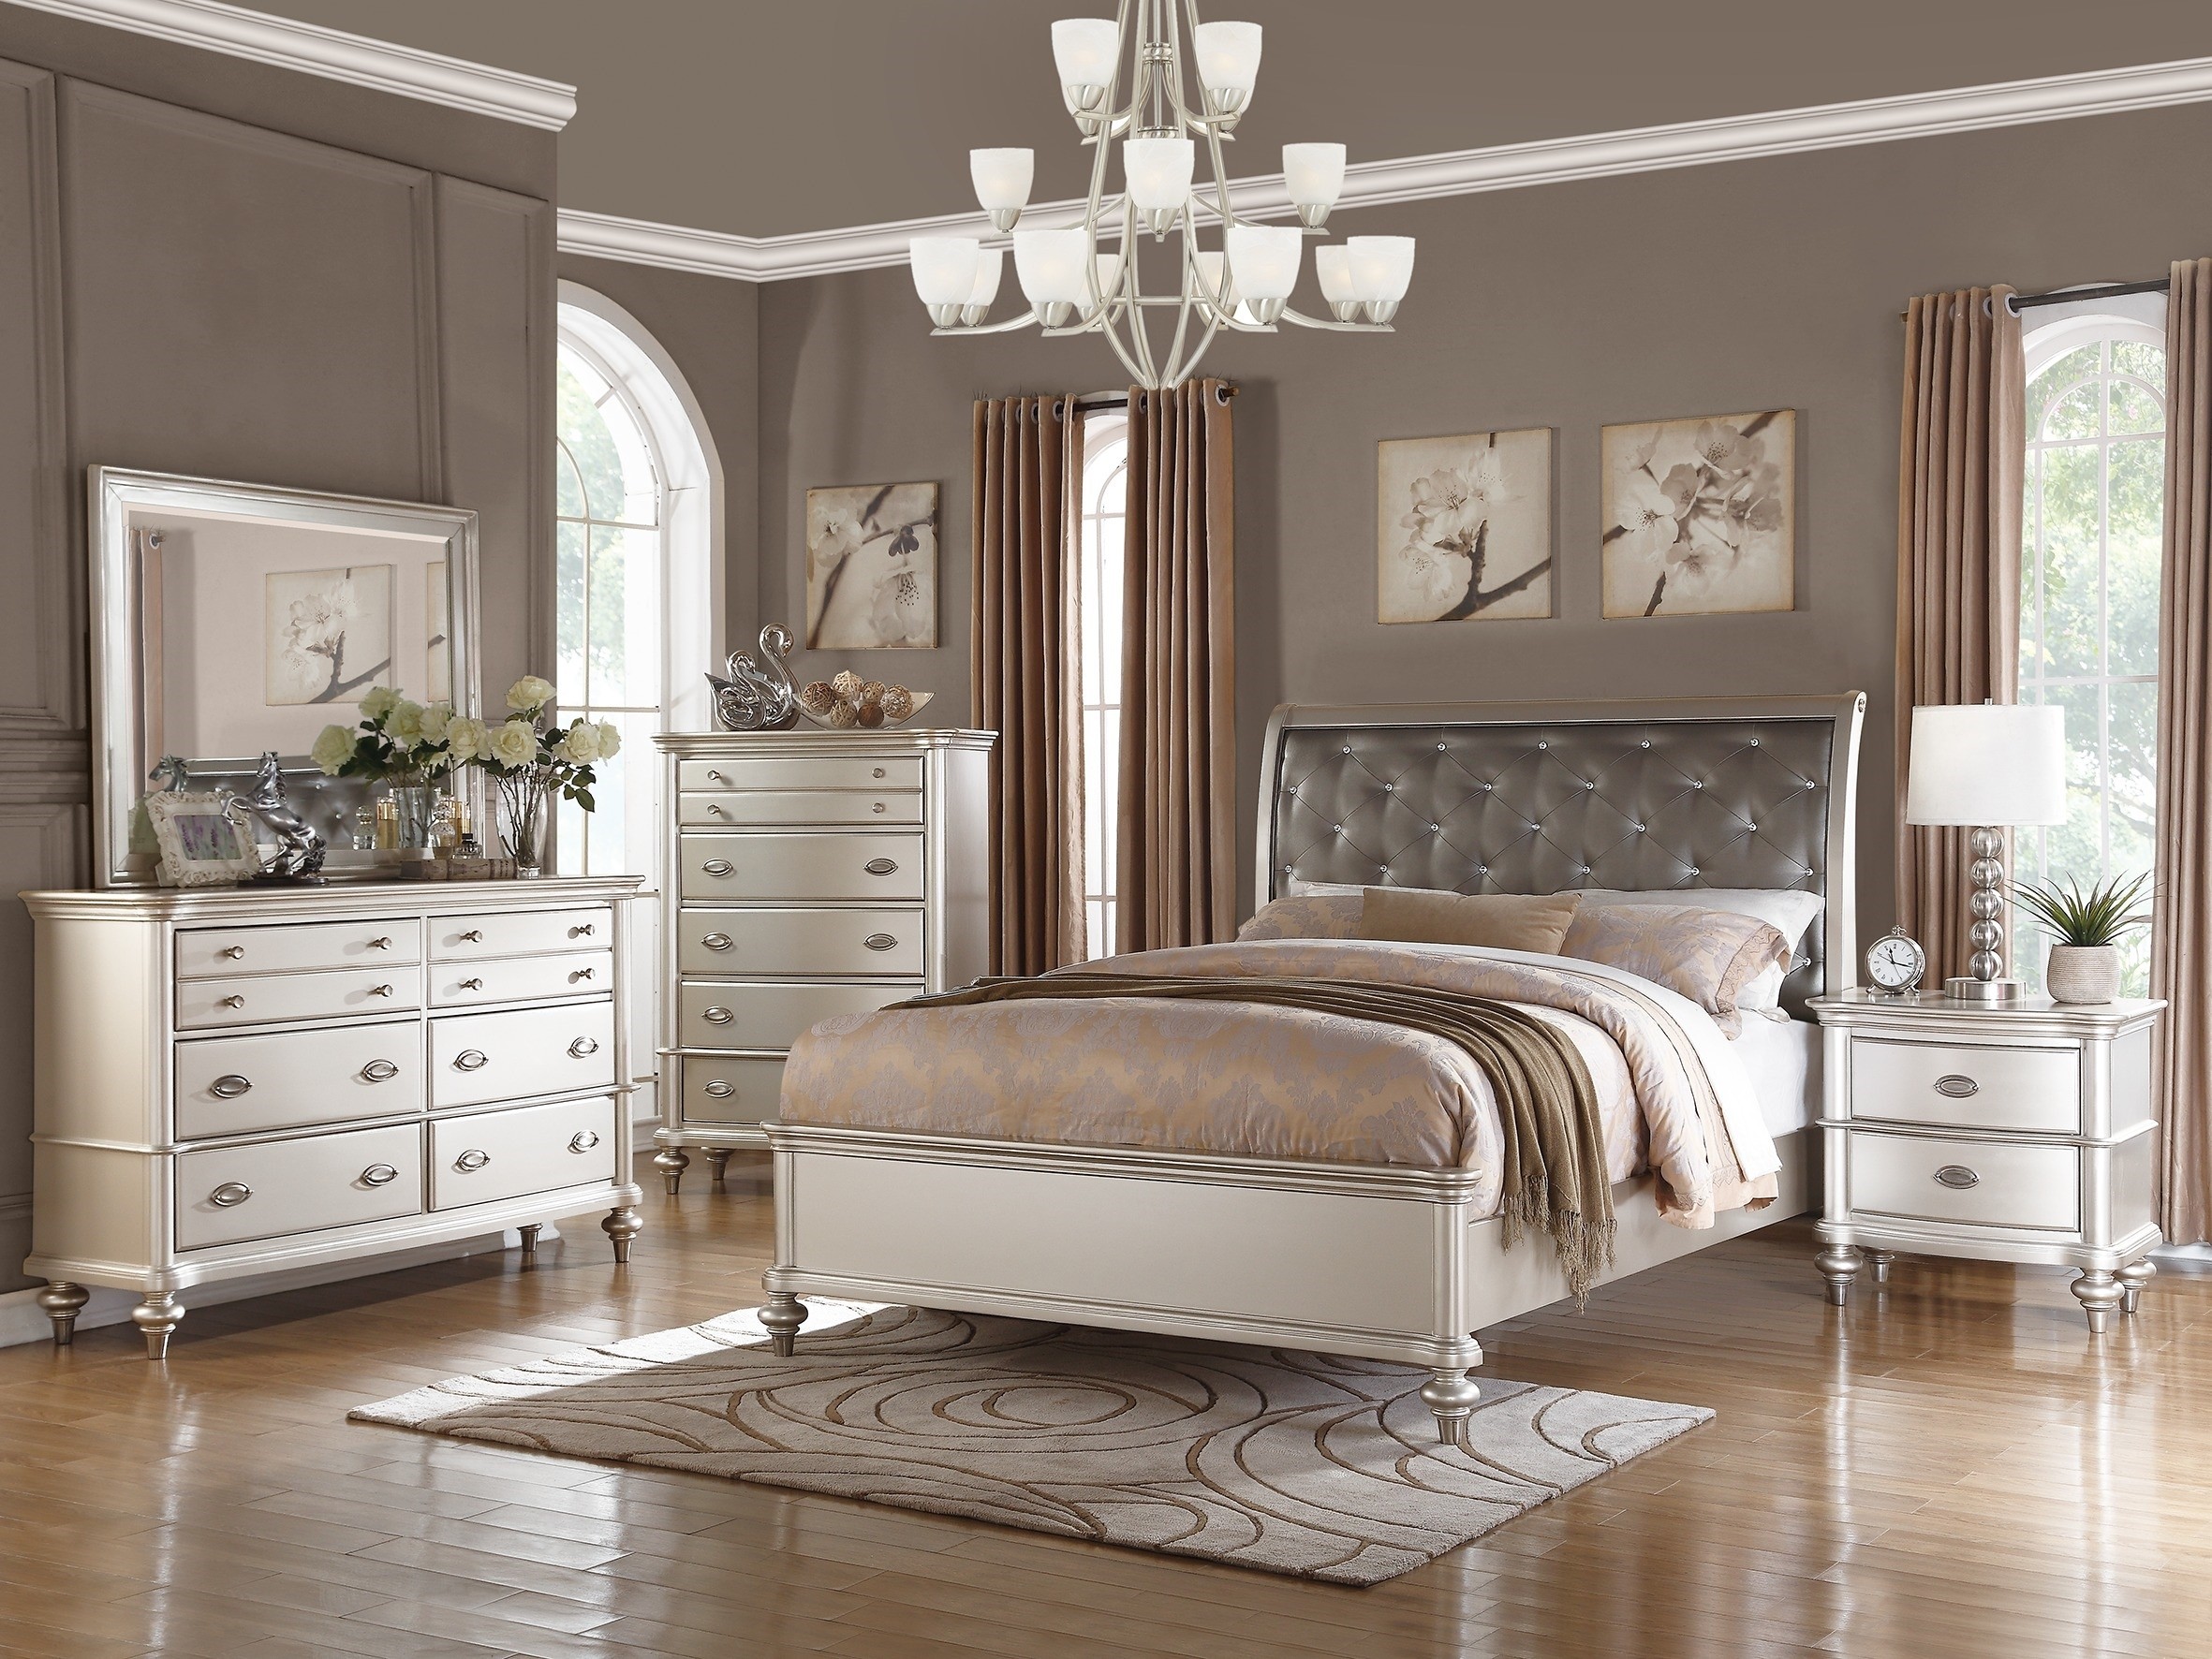 Royal antique silver color 4pc bedroom set queen size bed